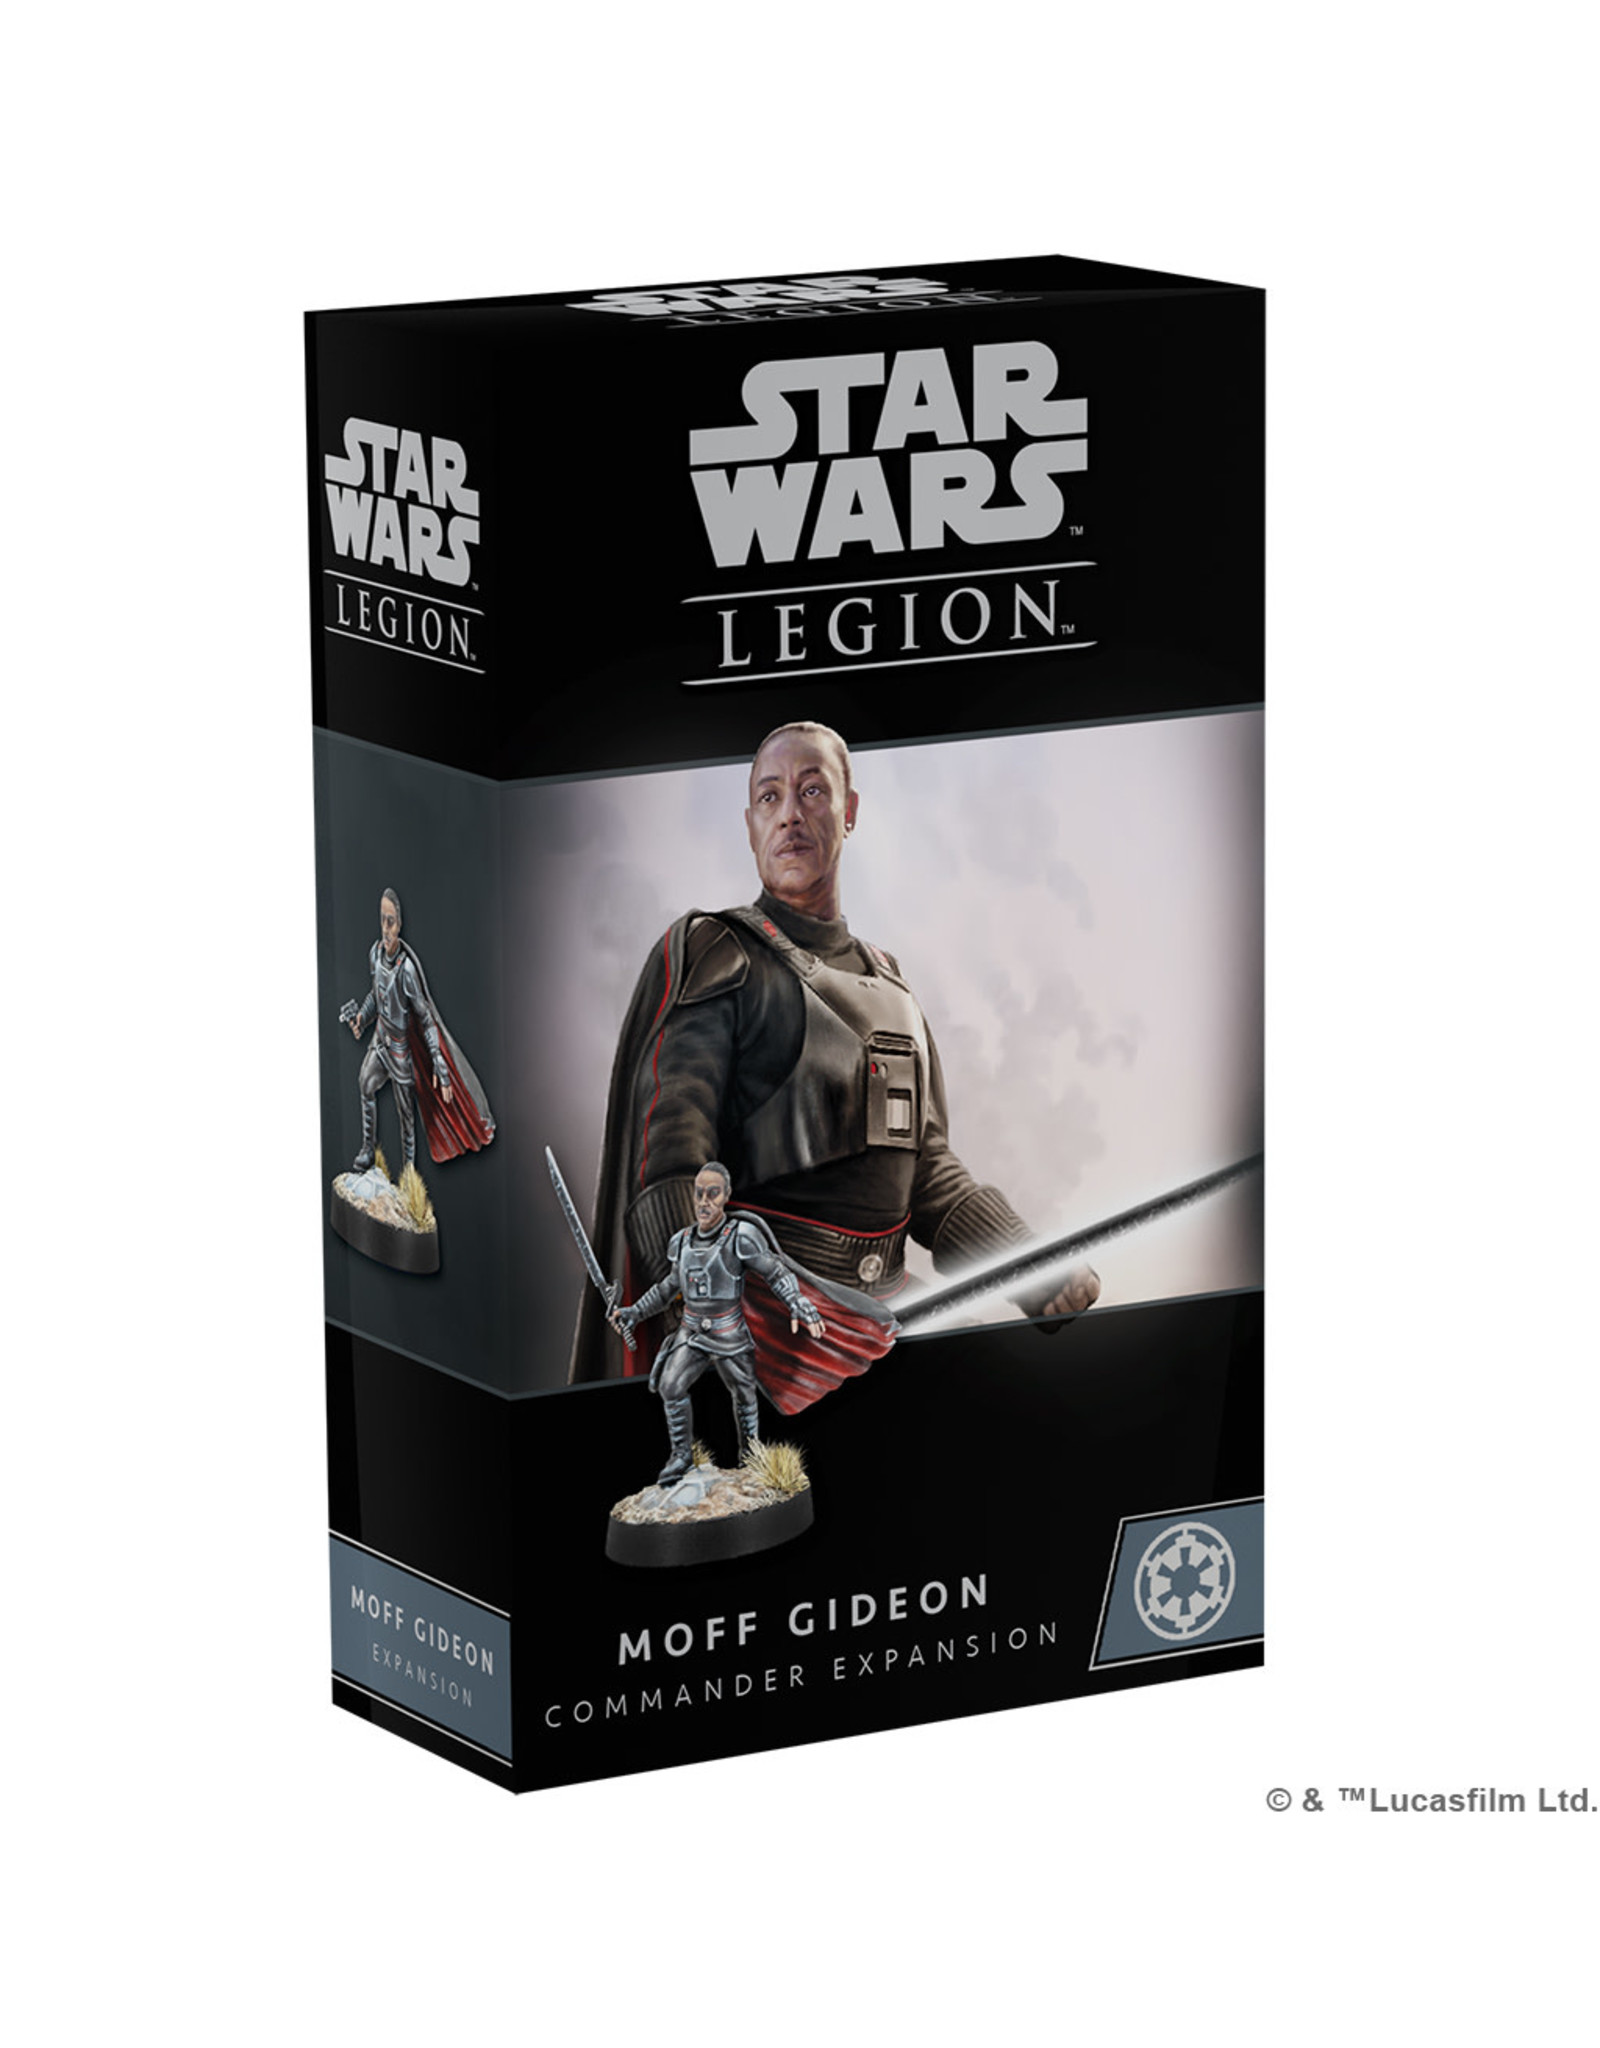 STAR WARS LEGION Star Wars Legion Moff Gideon Commander Expansion